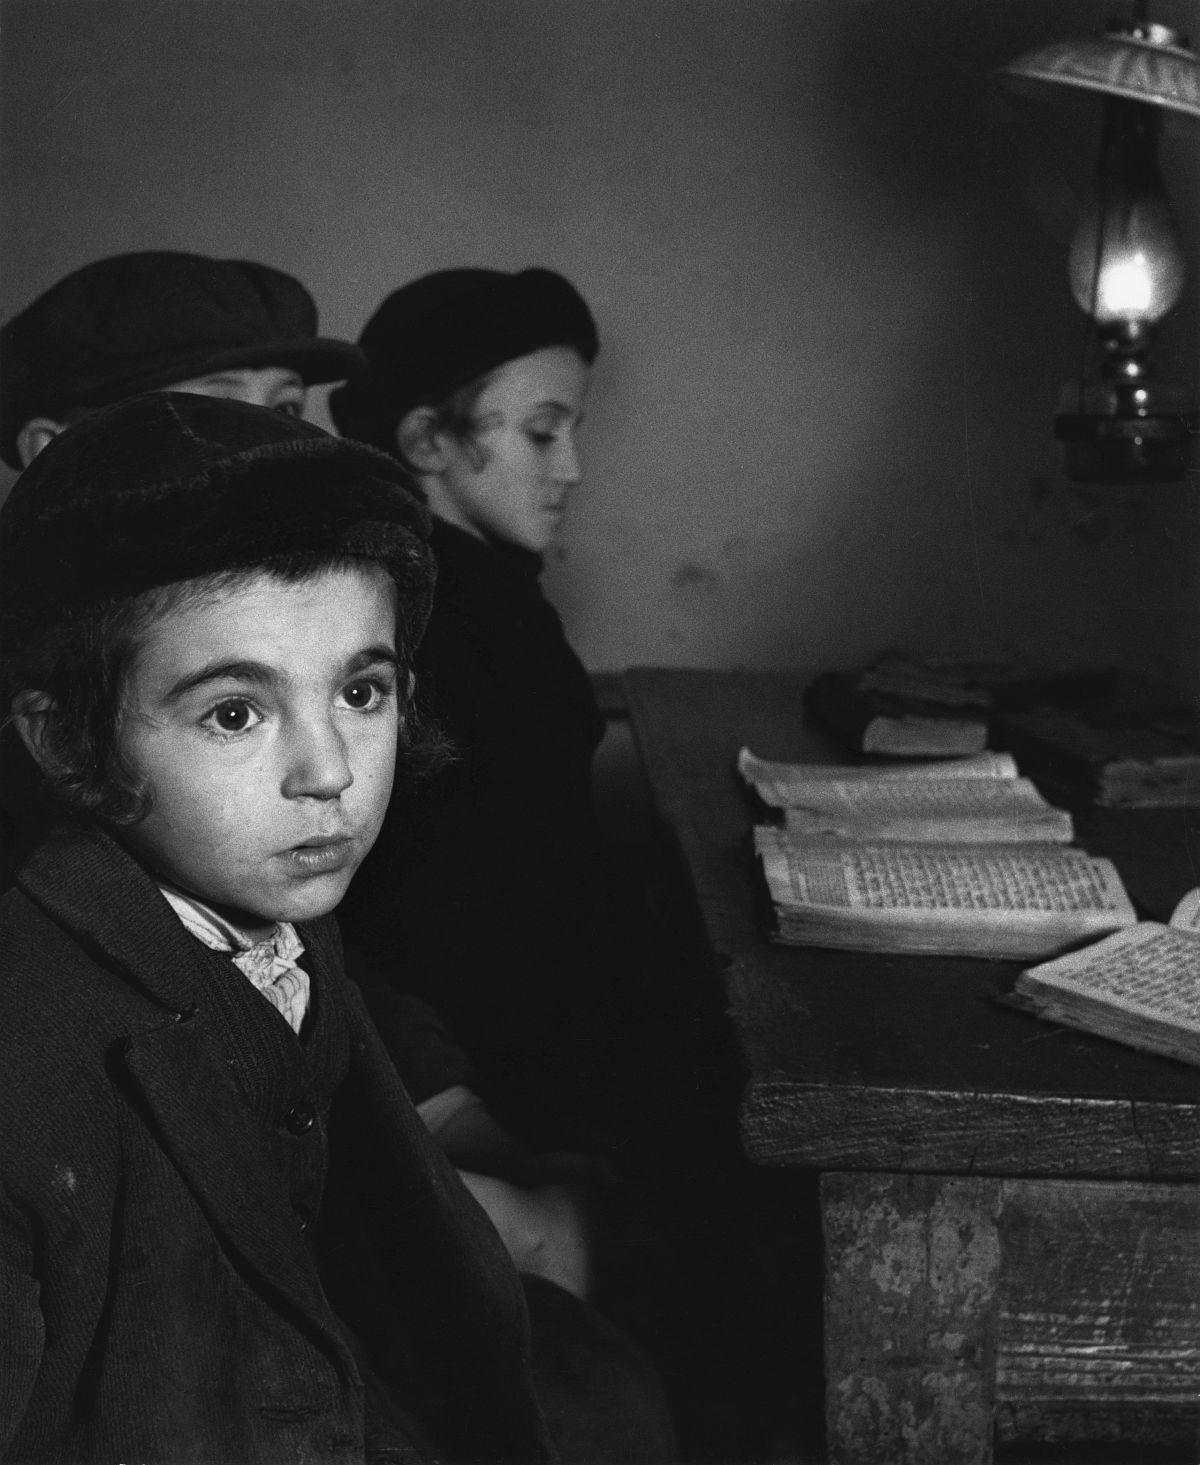 Roman Vishniac, [David Eckstein, seven years old, and classmates in cheder (Jewish elementary school), Brod], ca. 1938. Gelatin silver print. © Mara Vishniac Kohn, courtesy International Center of Photography. 